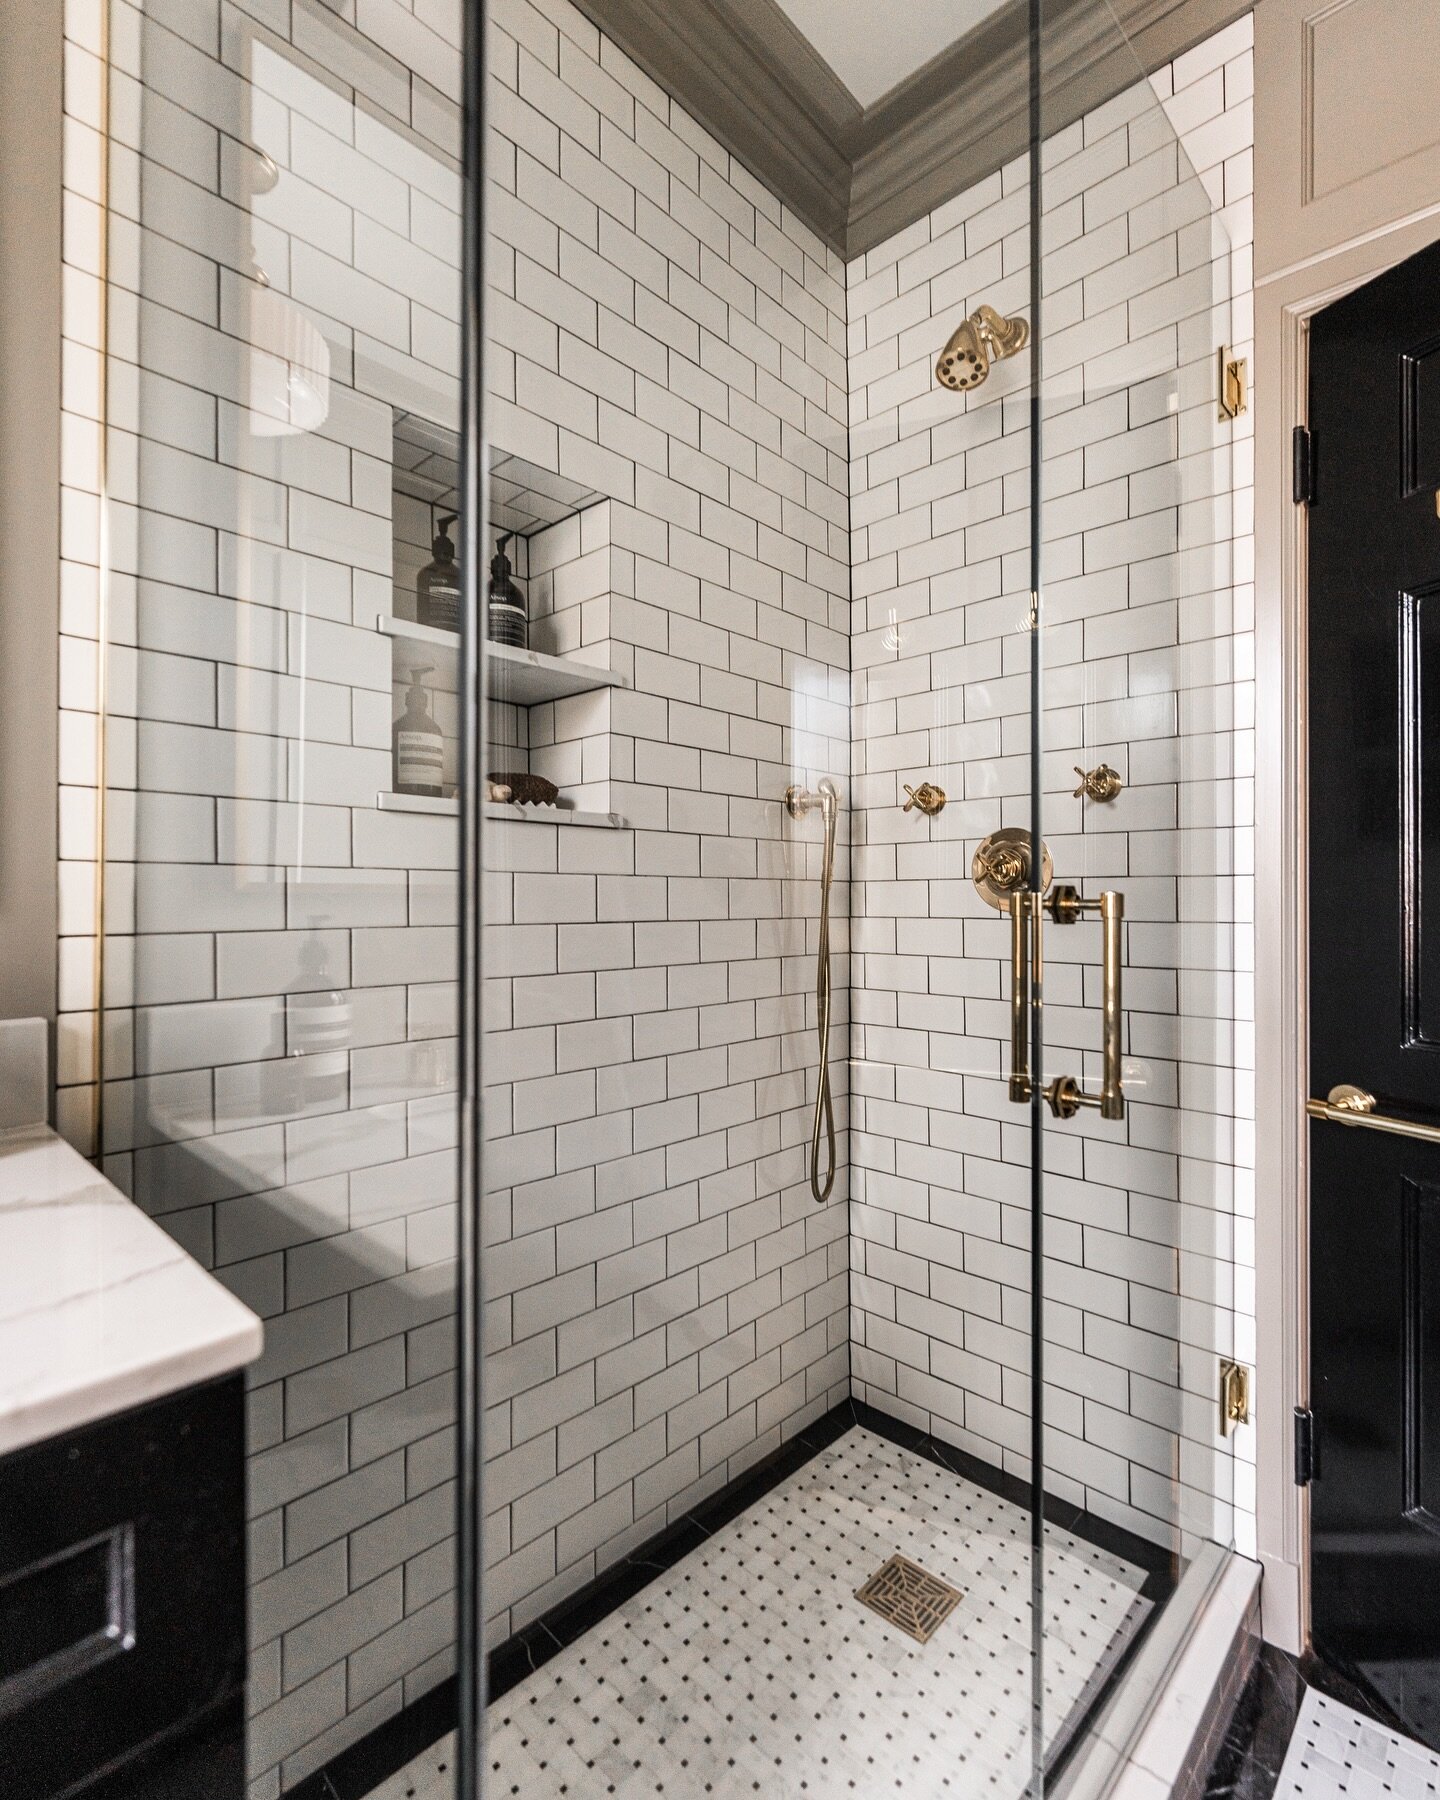 Bathing in timeless elegance! 📸 by @ryanocasiophoto  #interiordesign #bathroom